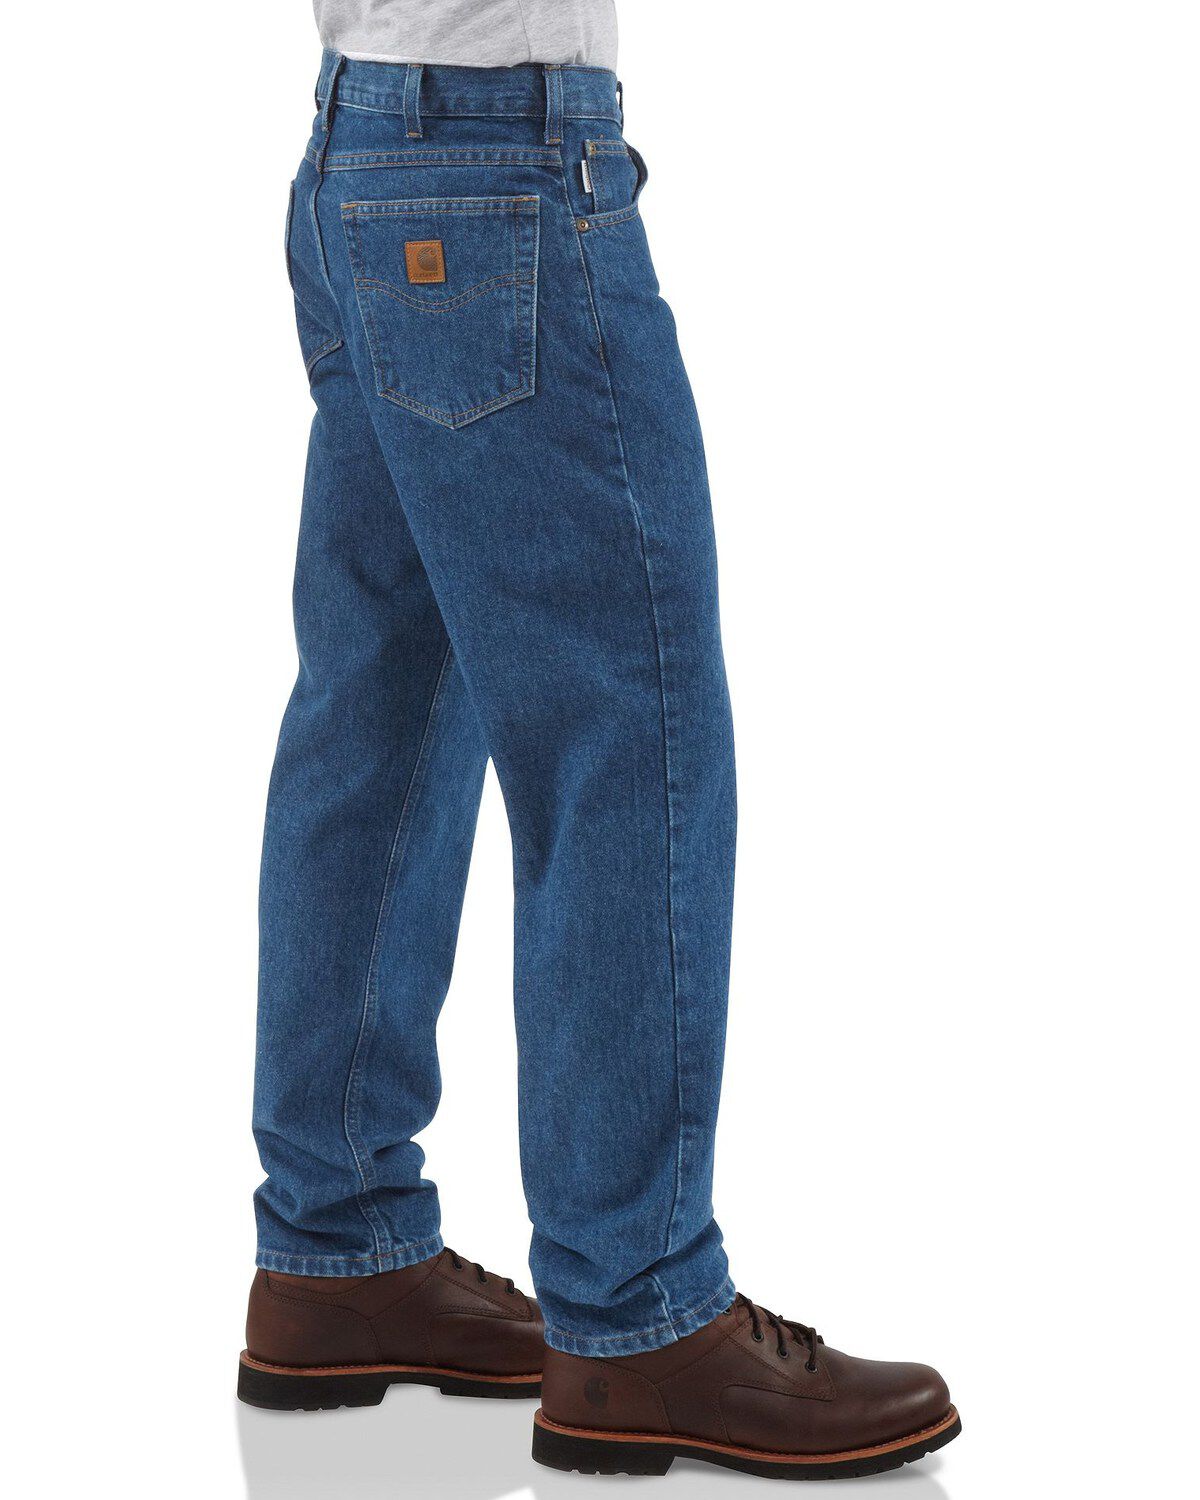 carhartt b480 jeans